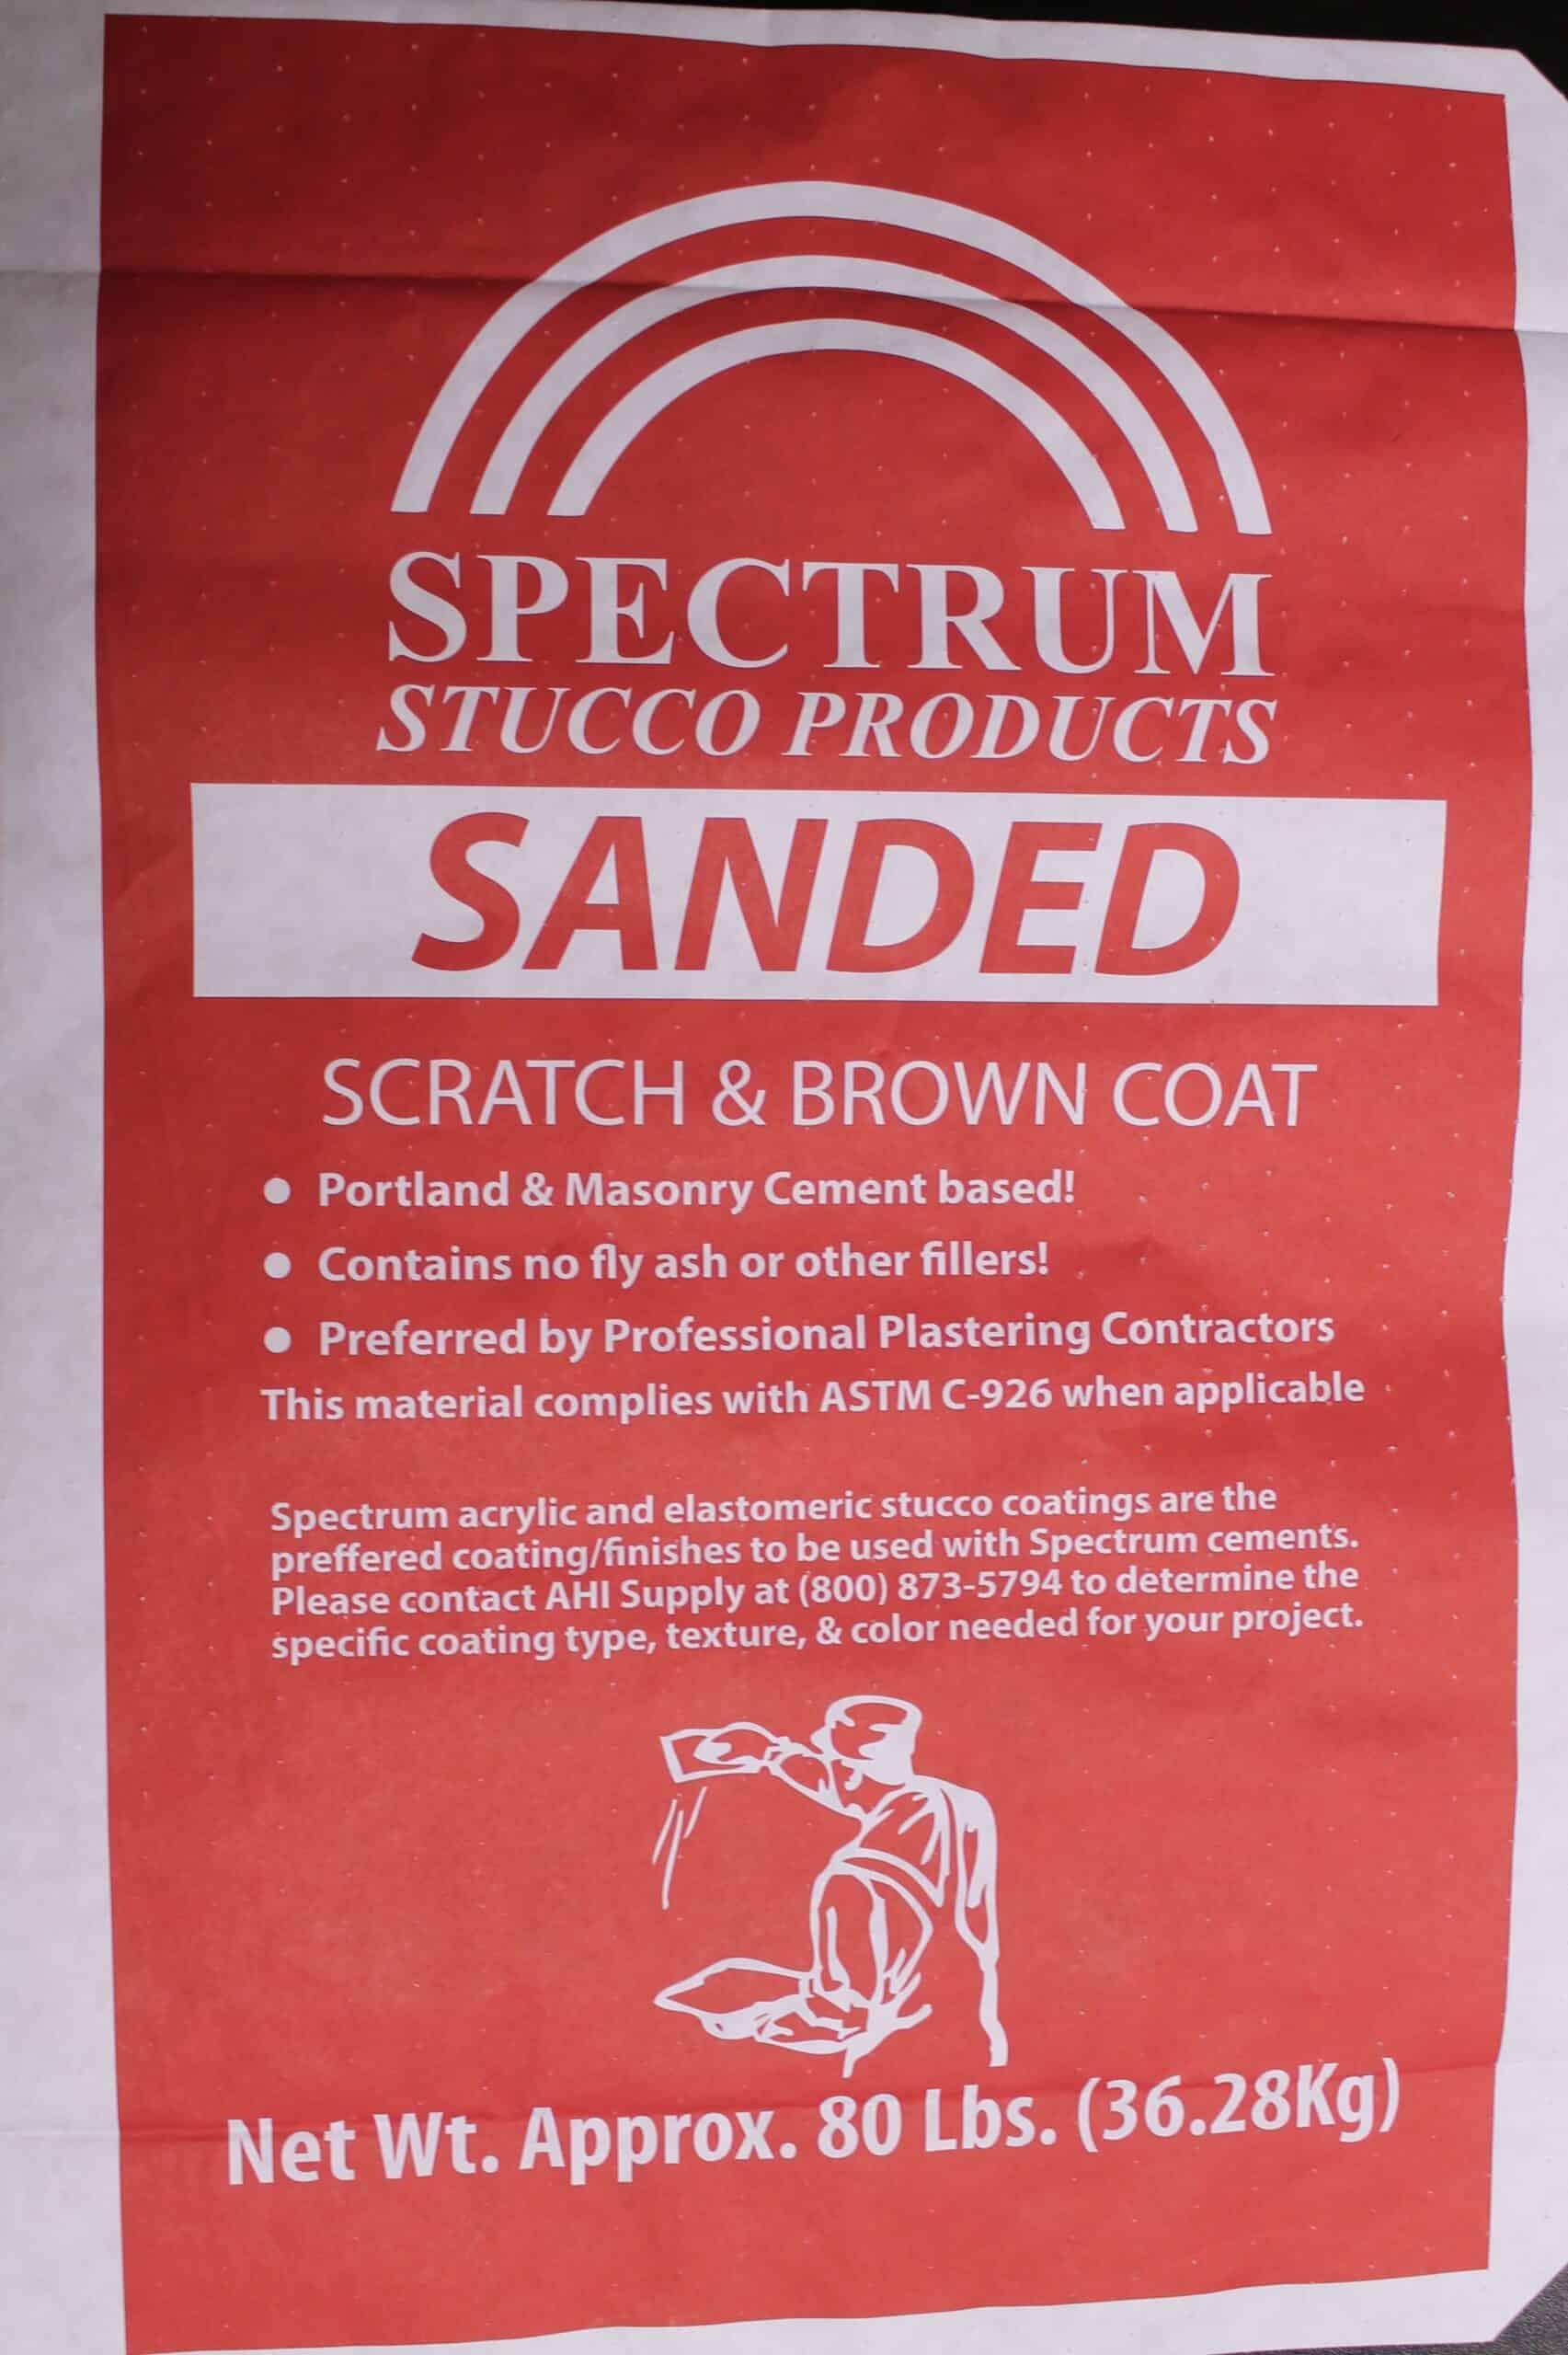 Product Spectrum Sanded Fiber Reinforced Scratch and Brown Coat - AHI Supply image